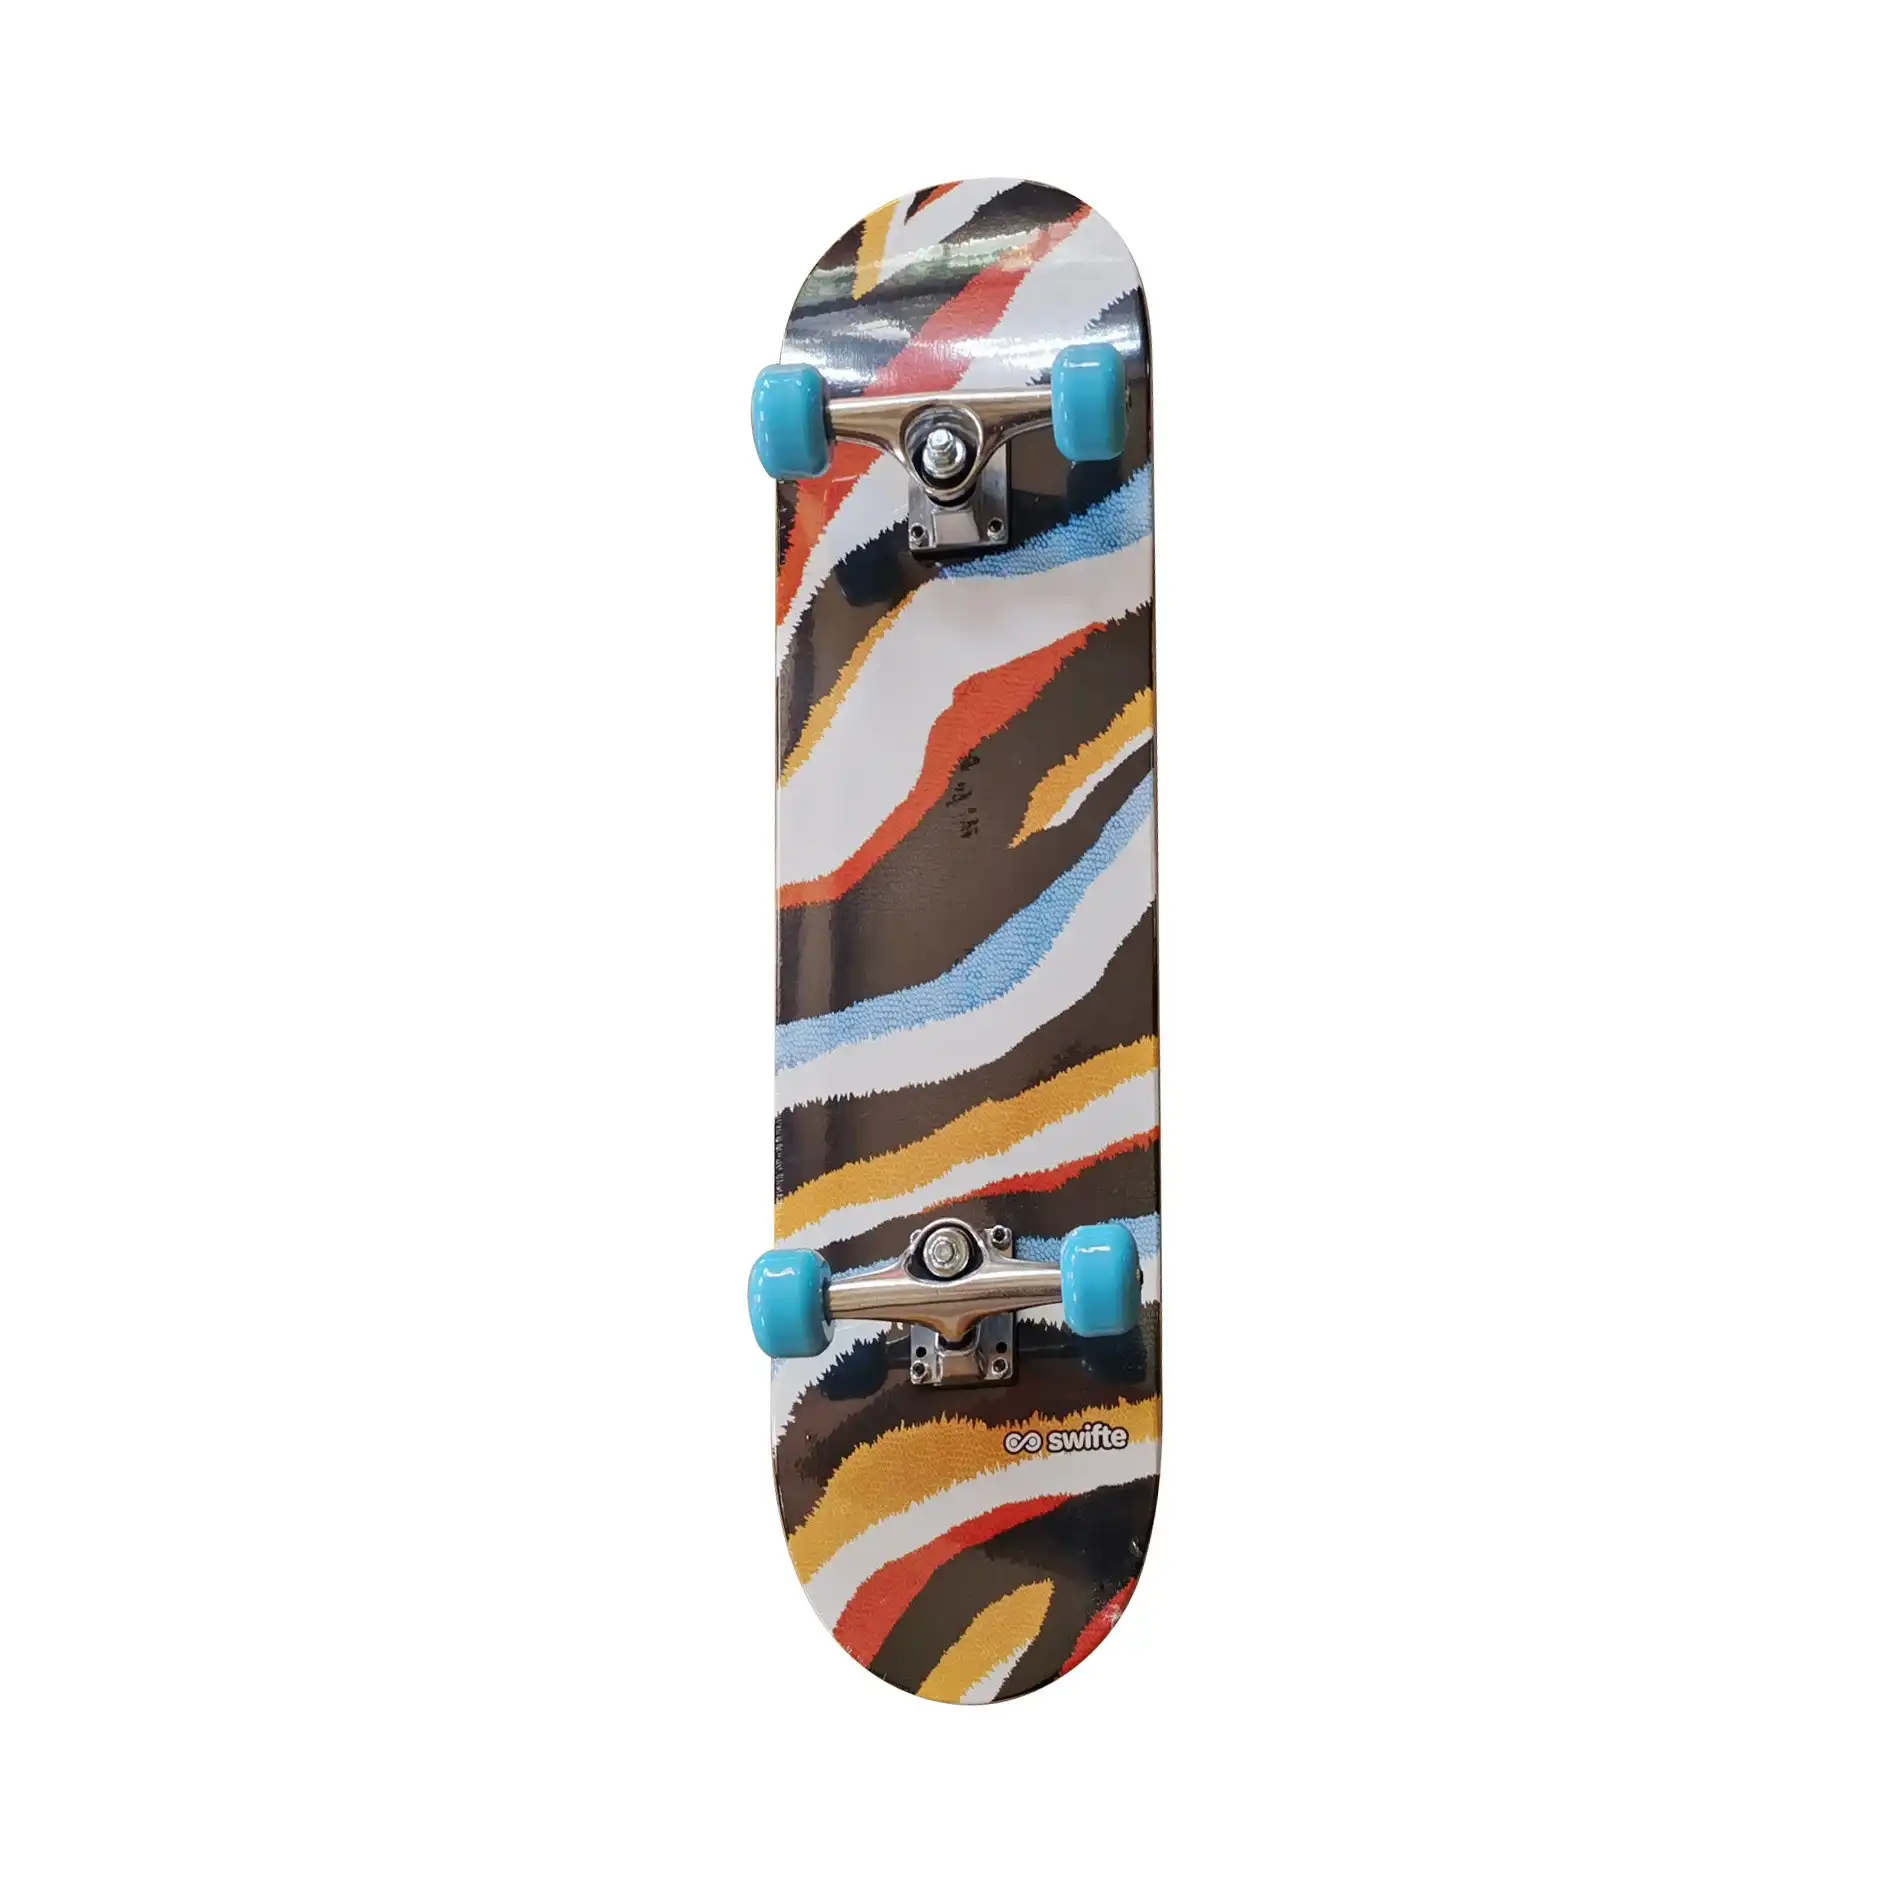 Swifte 31 X 8" Skateboard - Multicolour Zebra